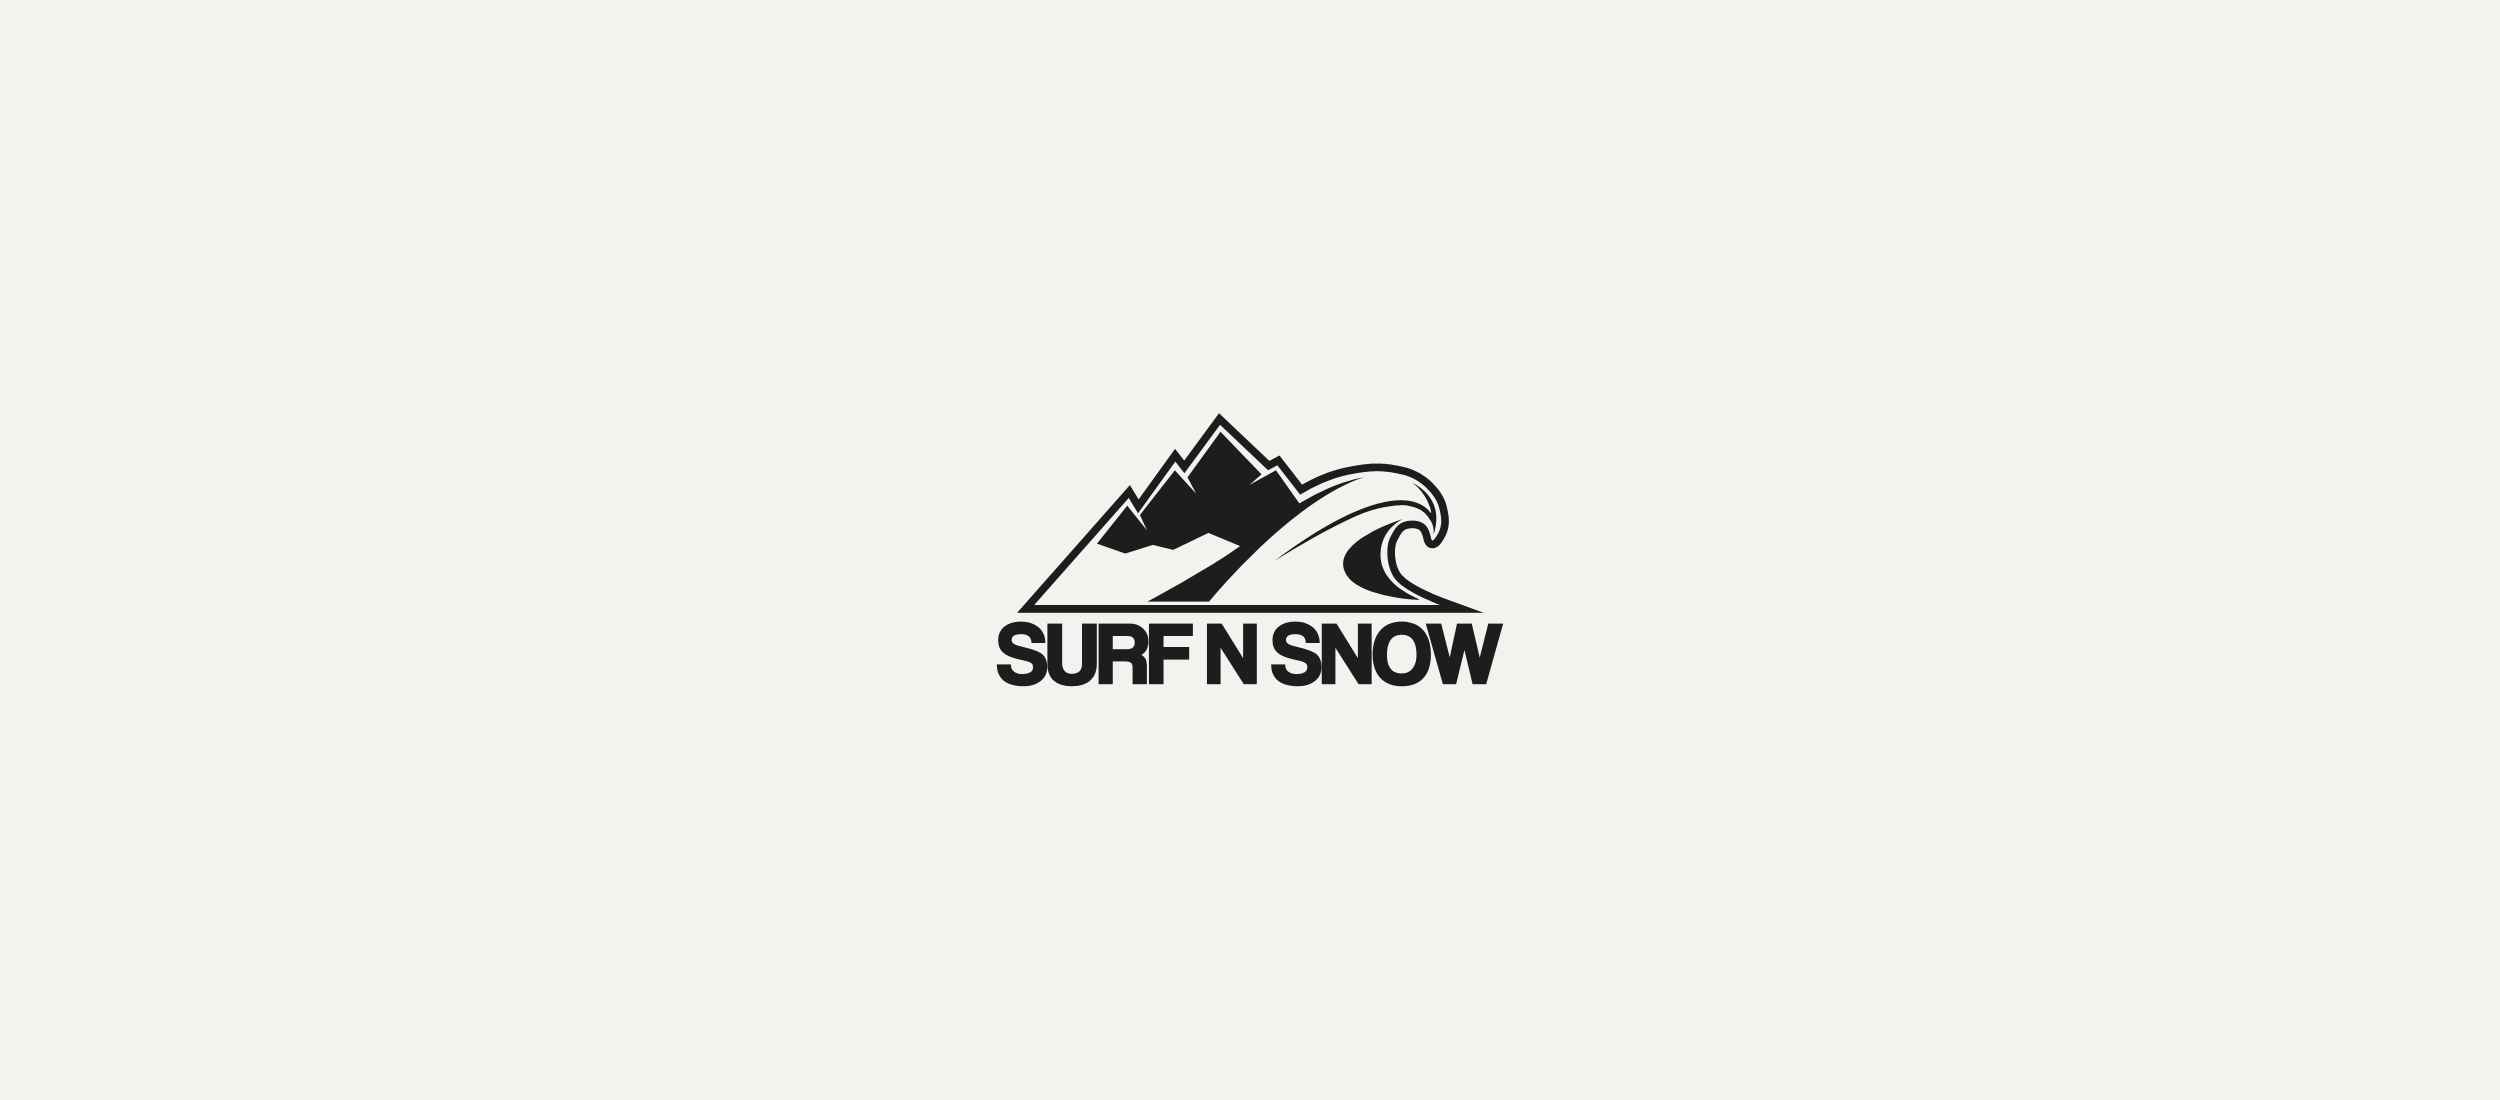 SurfNSnow logo design.